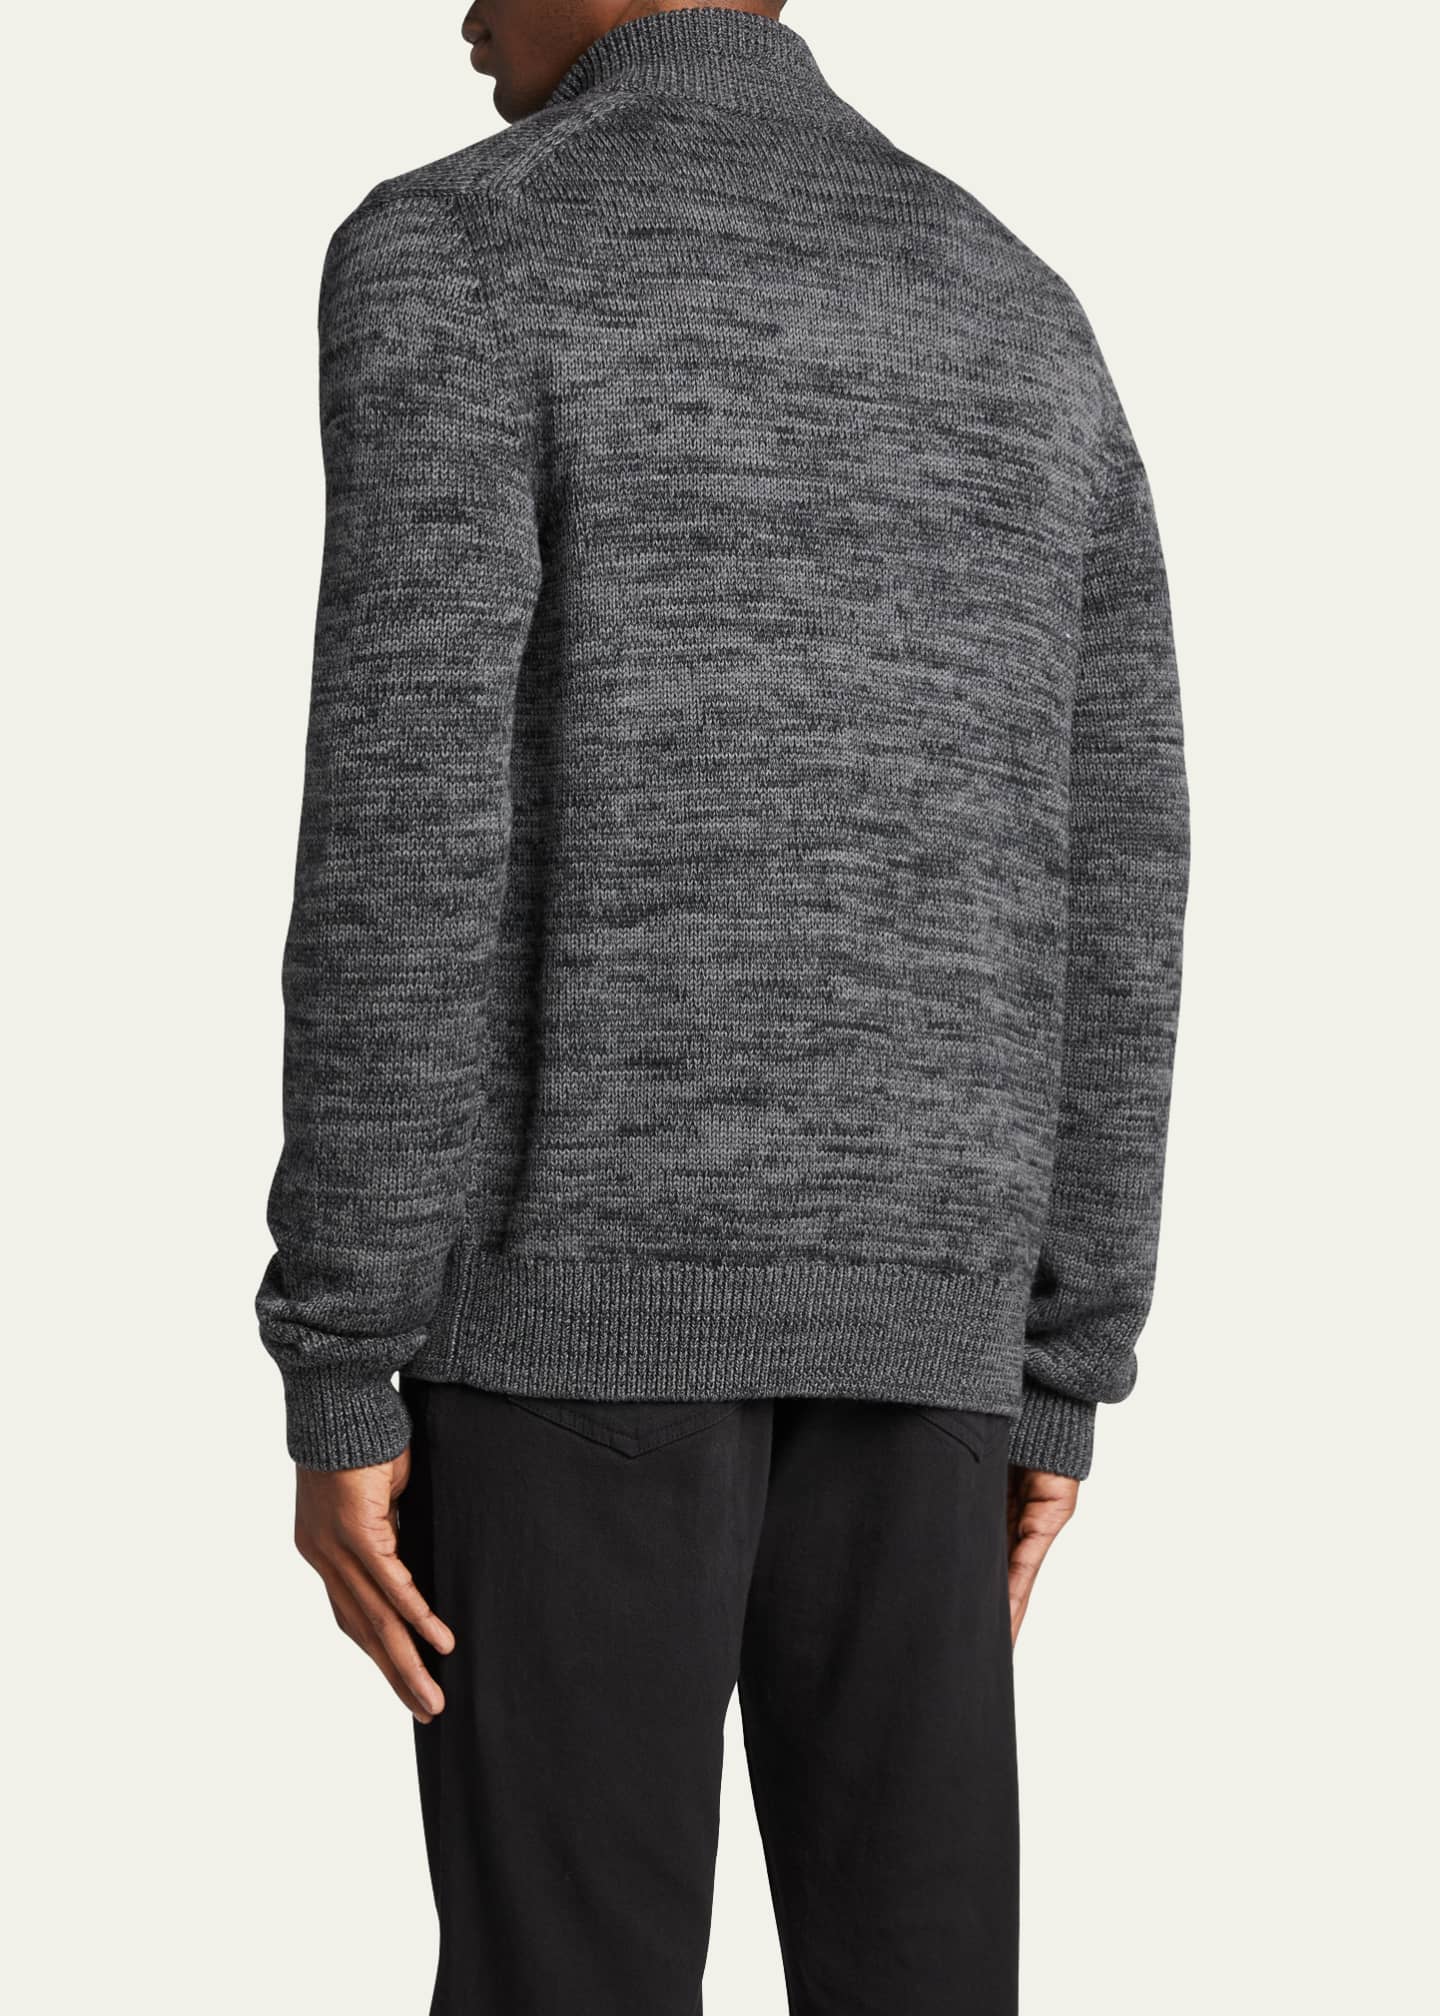 Brioni Men's Wool-Cashmere Cardigan Sweater - Bergdorf Goodman